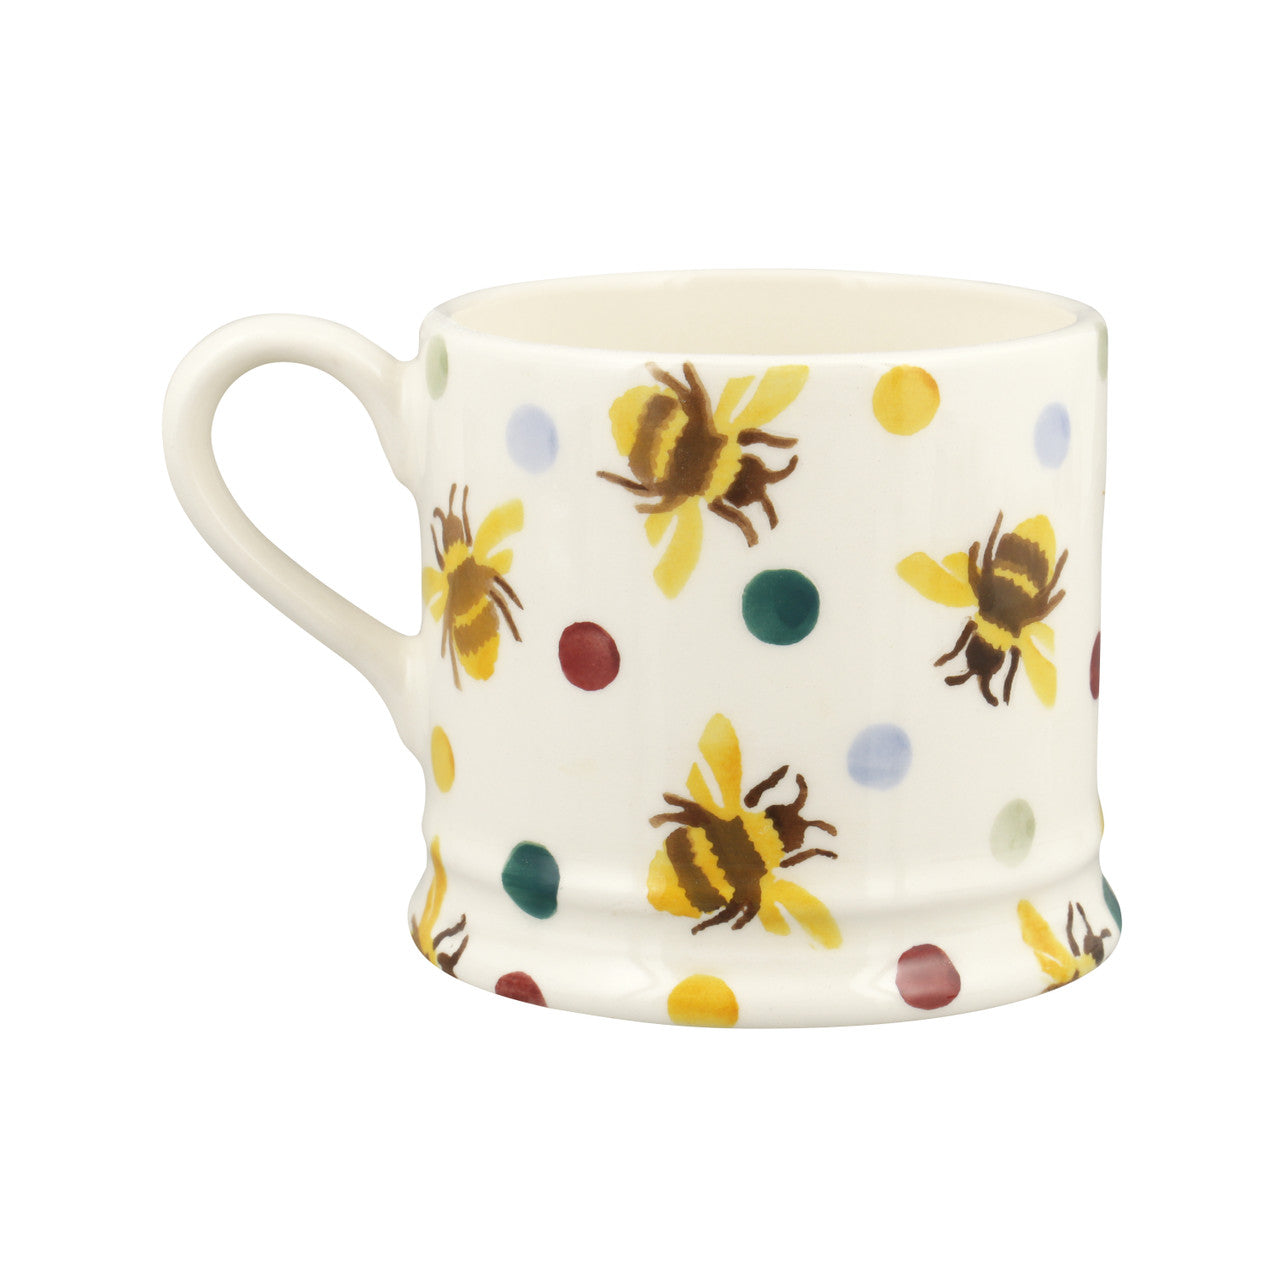 Hand made small Bumblebee & Small Polka Dot mug from Emma Bridgewater